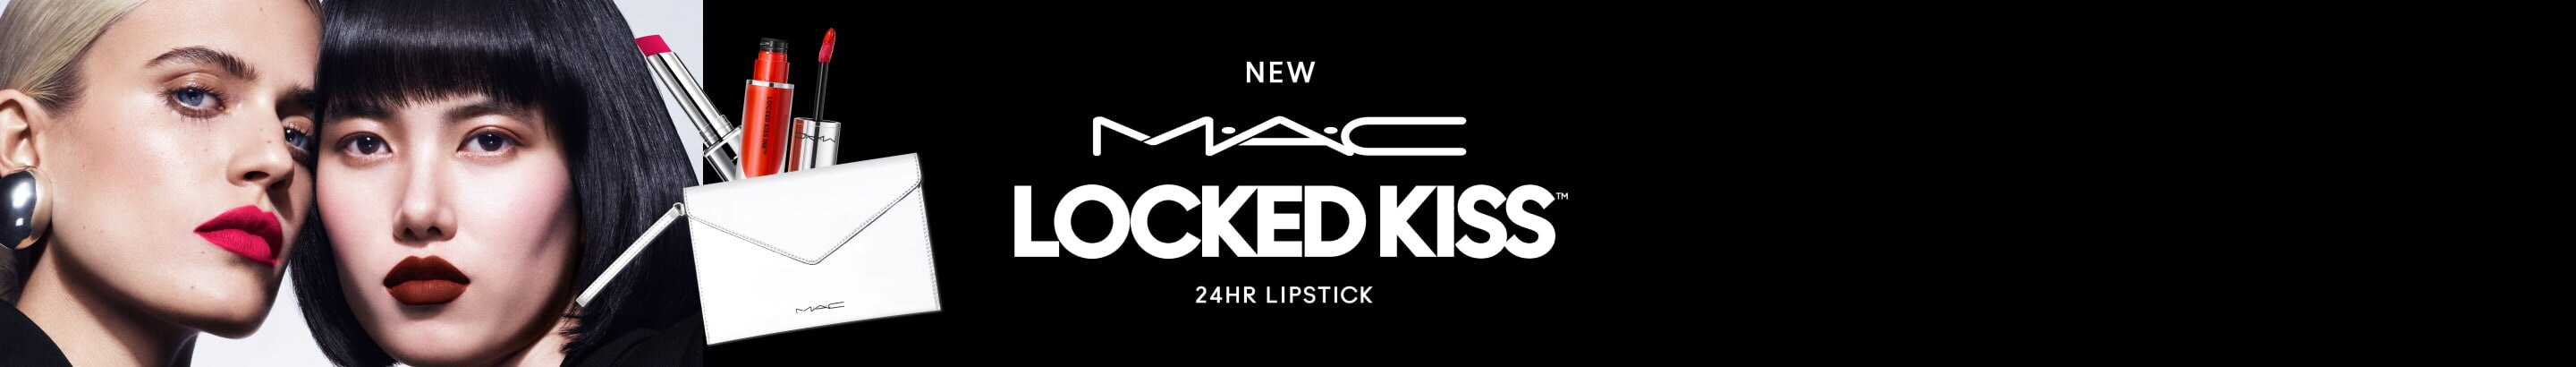 MAC LOCKED KISS ENVELOPE BAG GWP PROMO